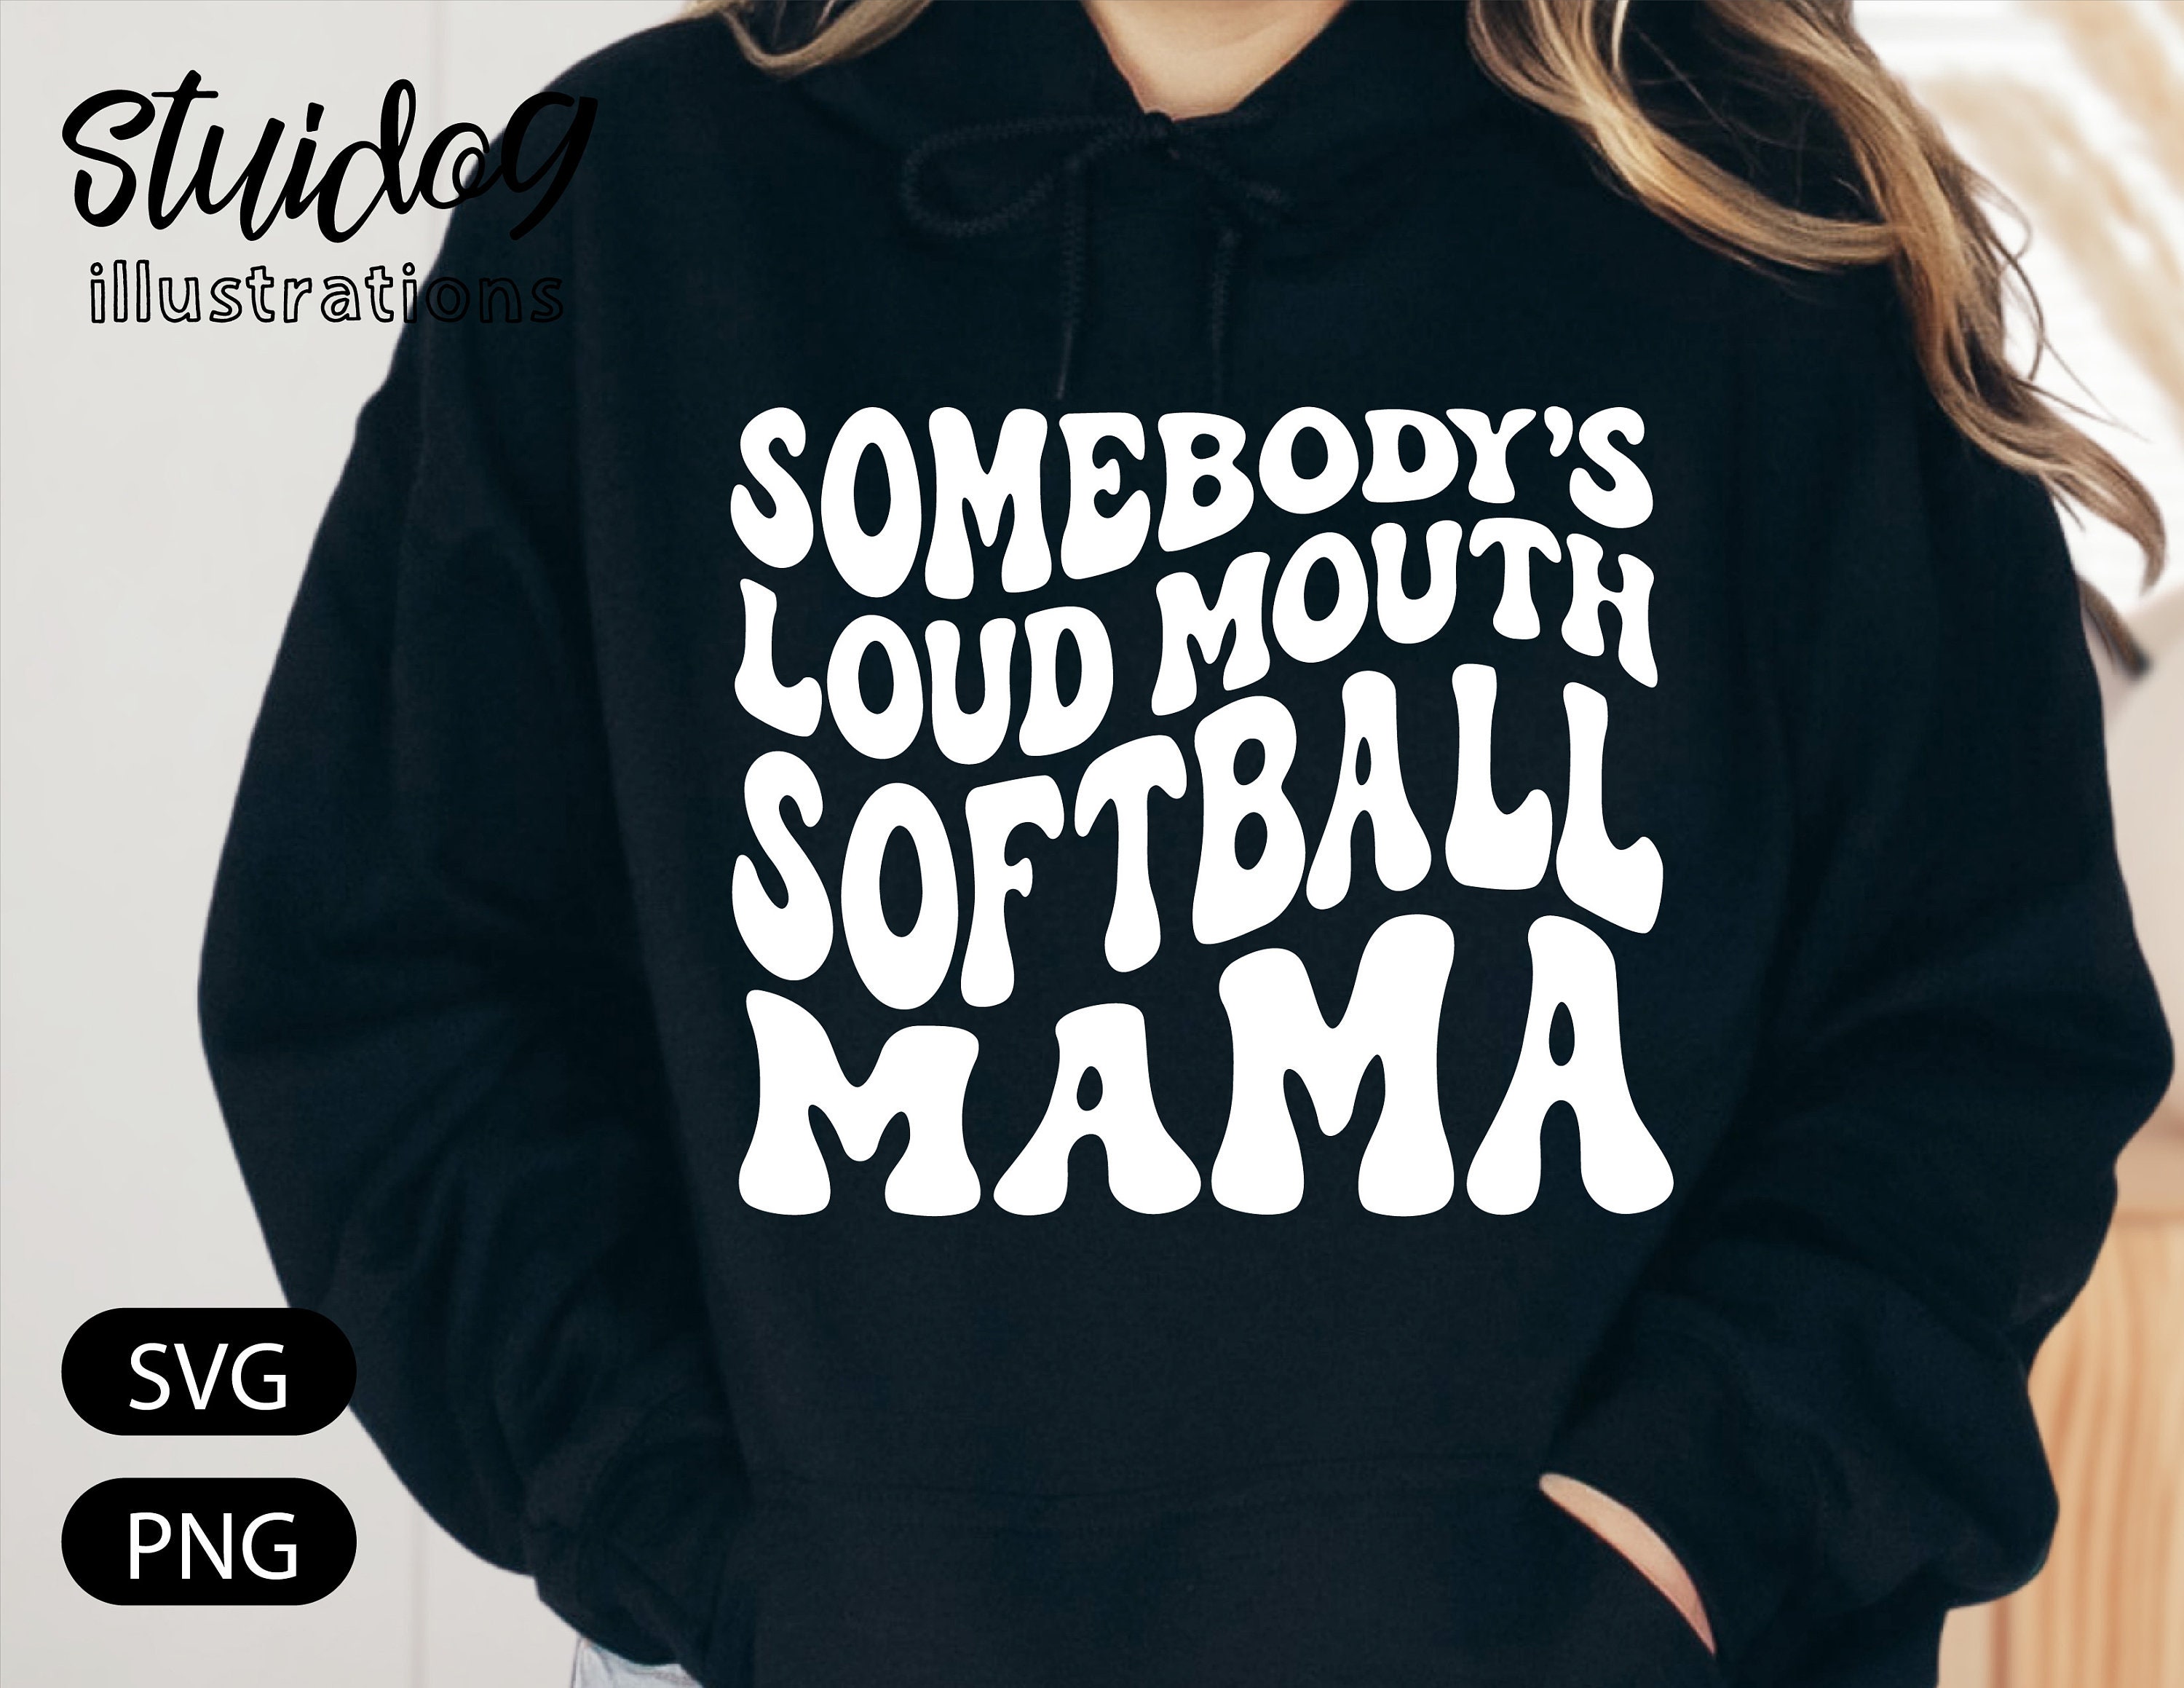 Retro Sports Shirts Somebody's Loud Mouth Softball Sister 